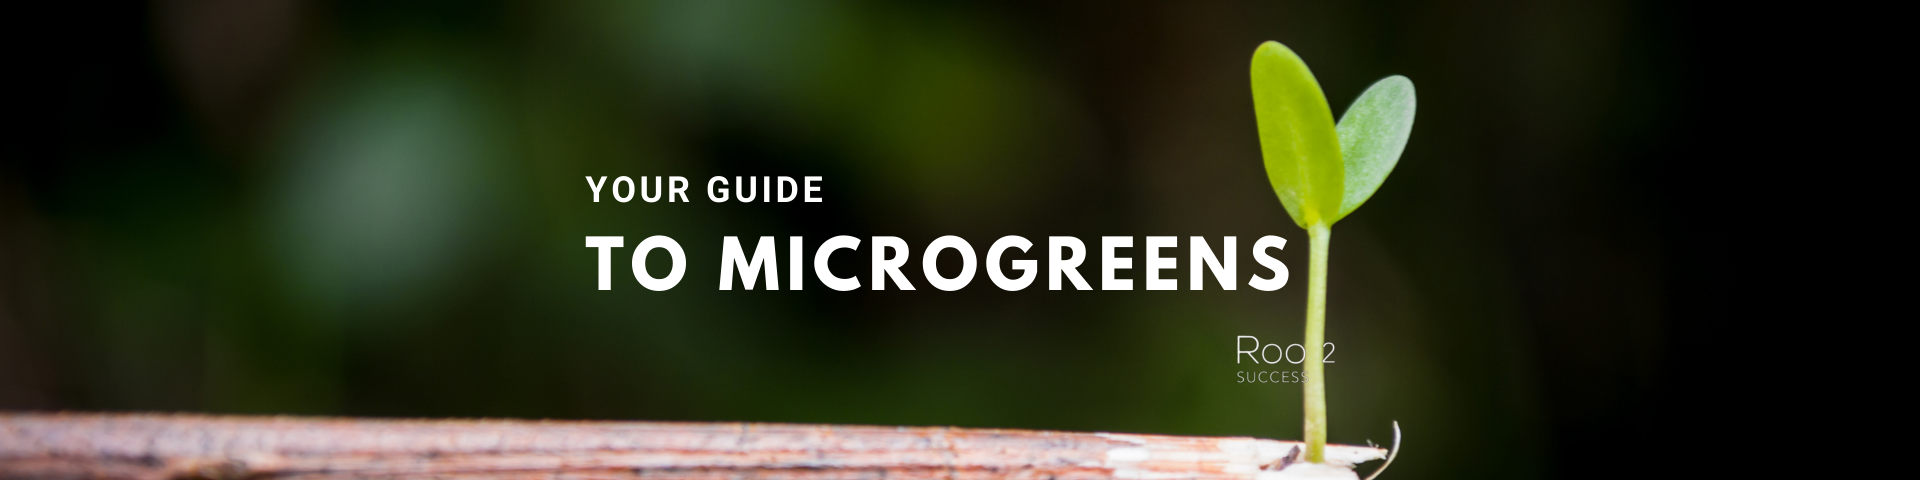 Guide to microgreens